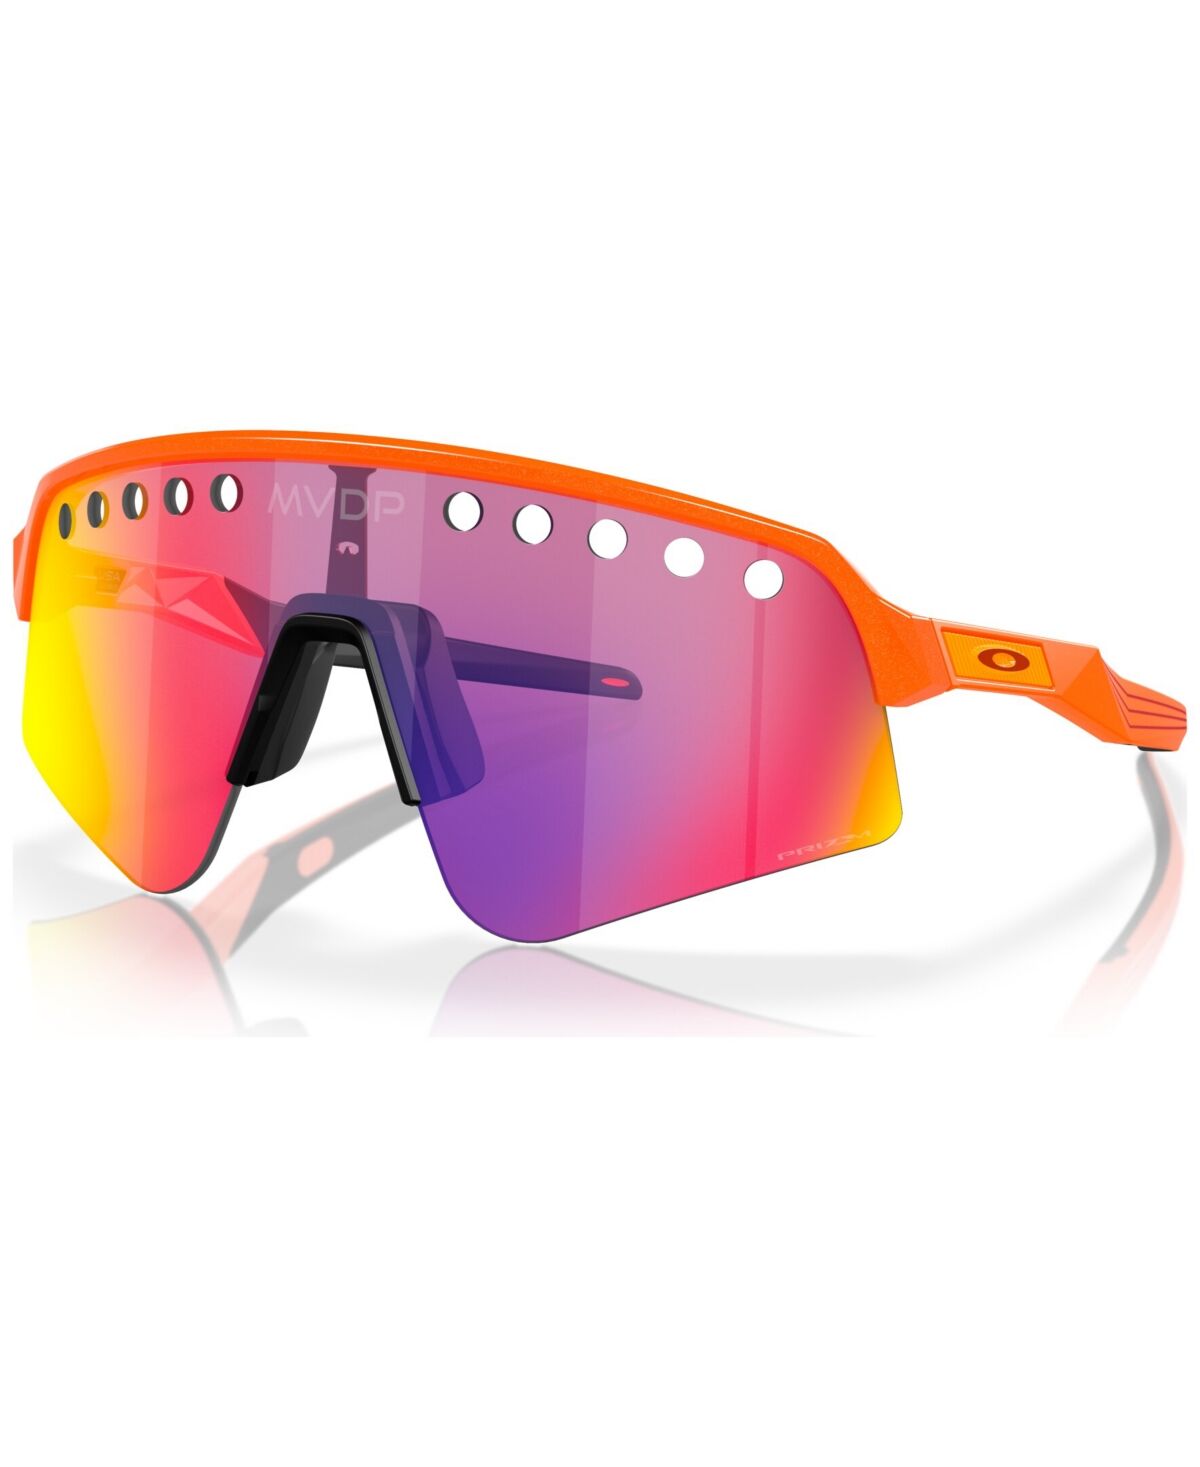 Oakley Men's Sunglasses, Mathieu Van Der Poel Signature Series Sutro Lite - Orange Sparkle